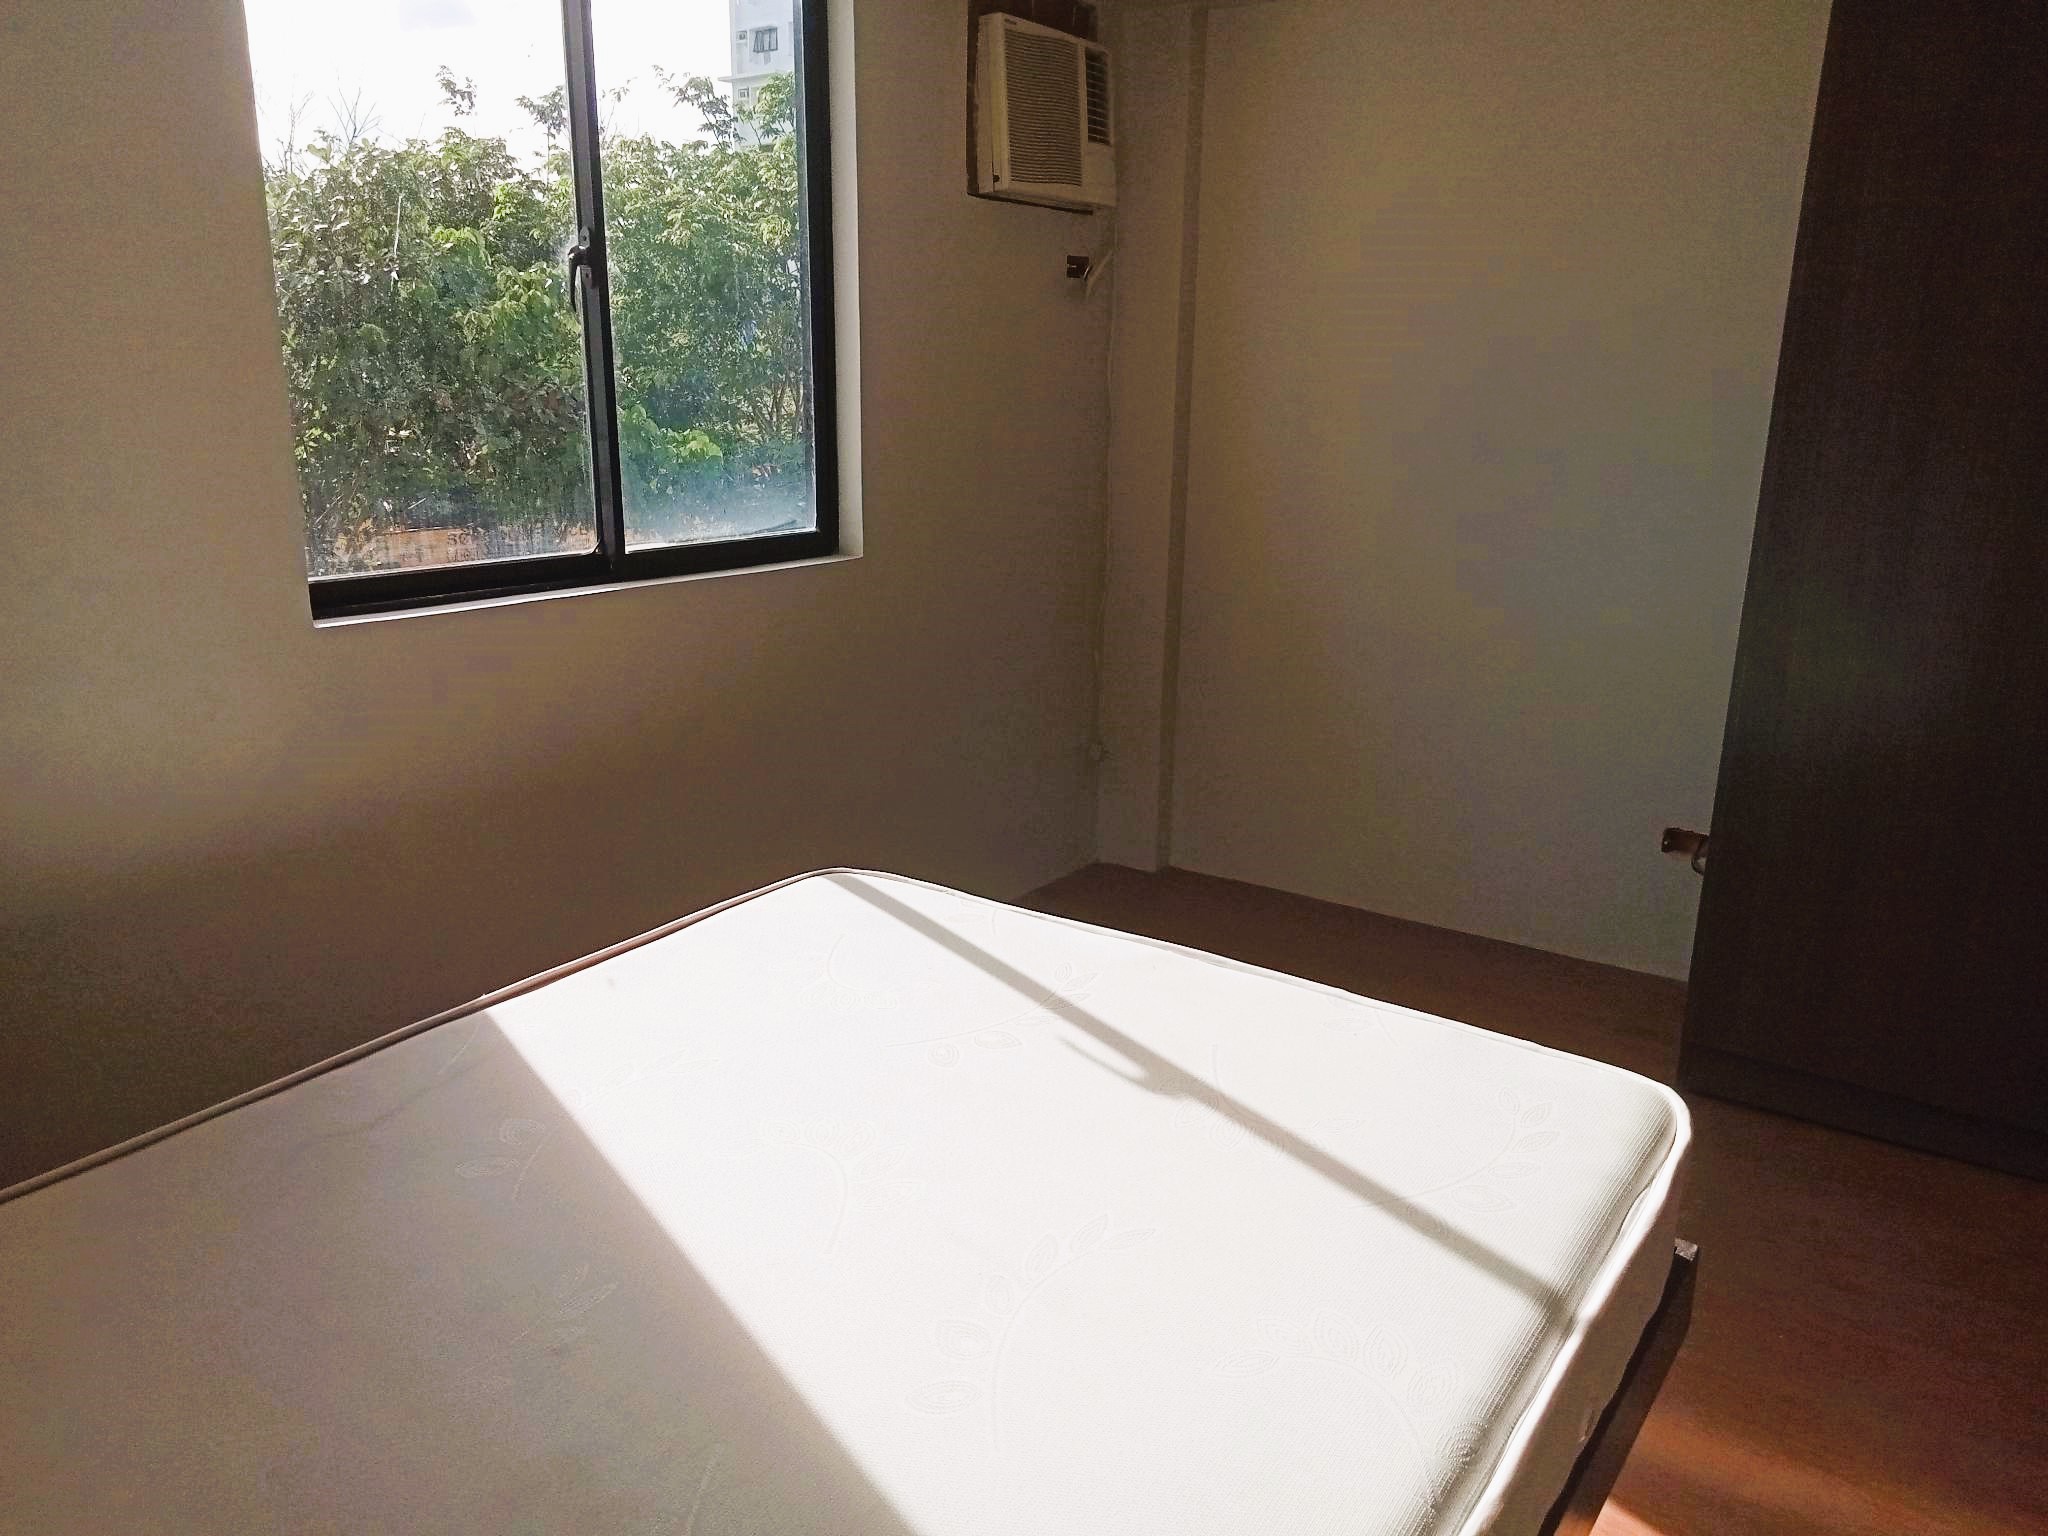 3-bedroom-semi-furnished-apartment-in-canduman-mandaue-city-near-ateneo-de-cebu